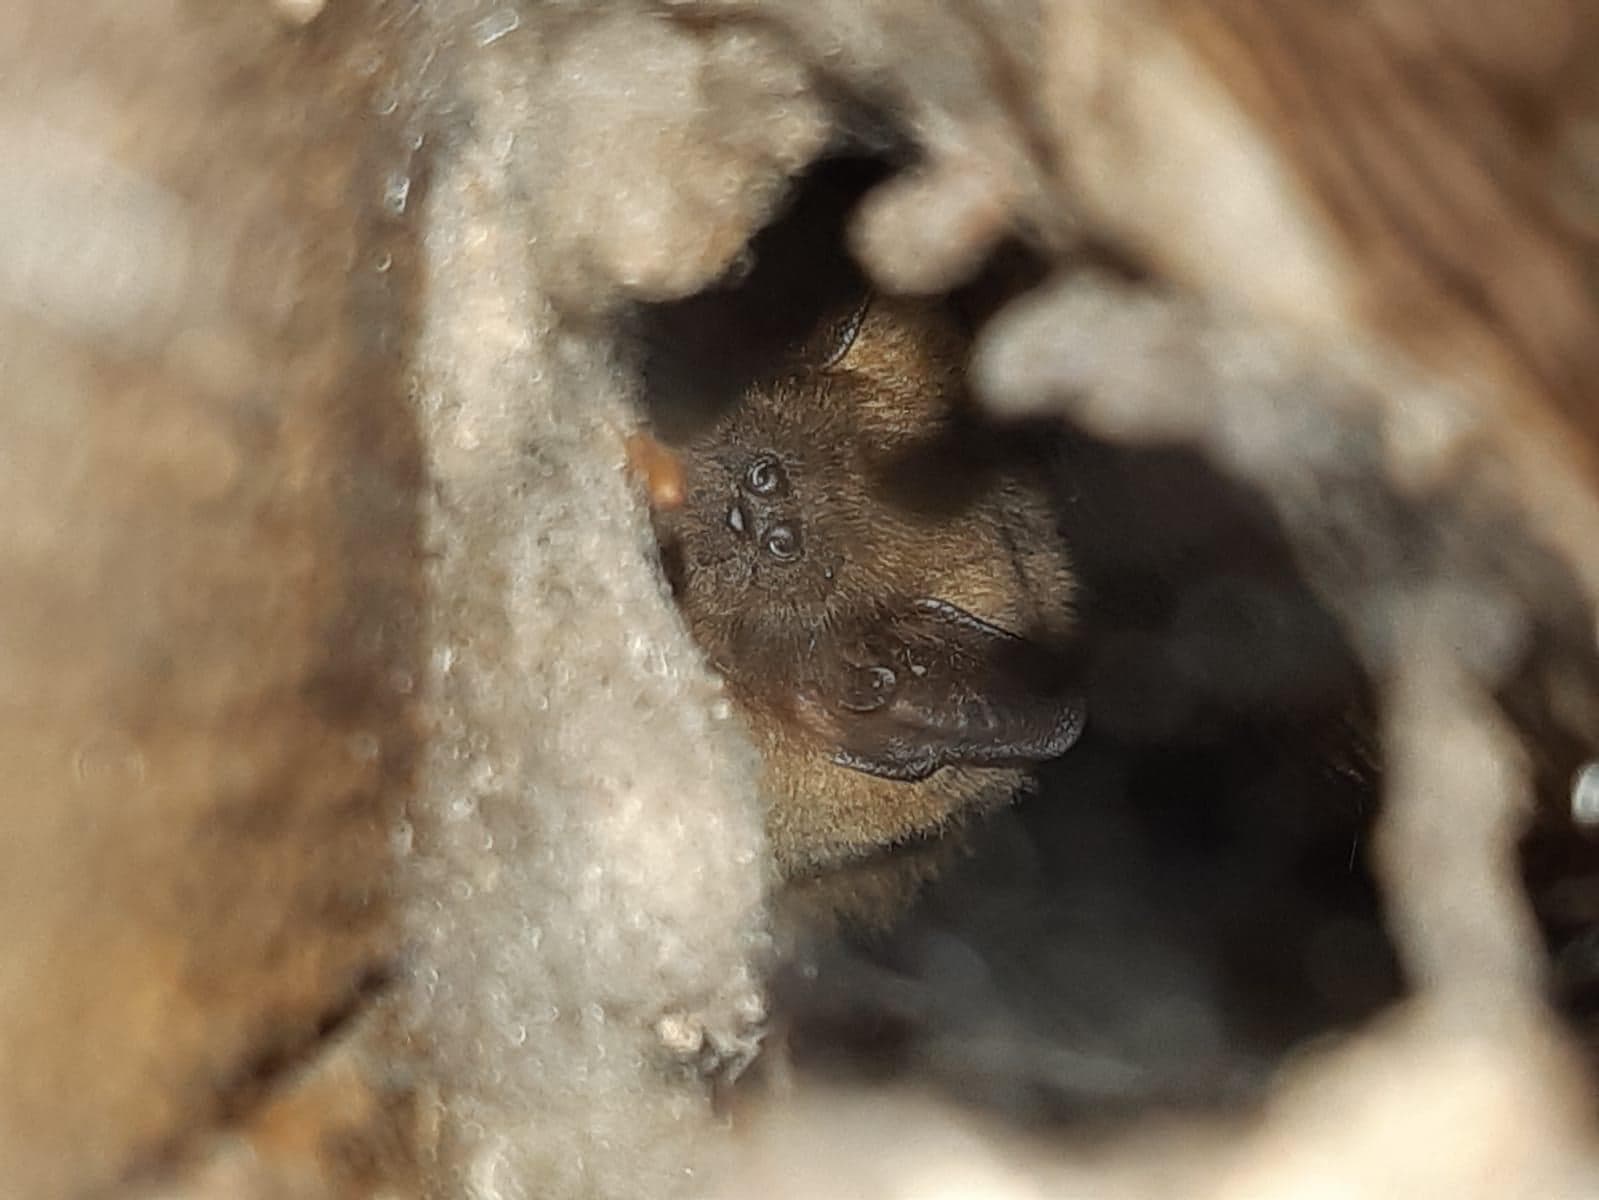 International bat appreciation day 2021 - The importance of bats to ecosystems 3